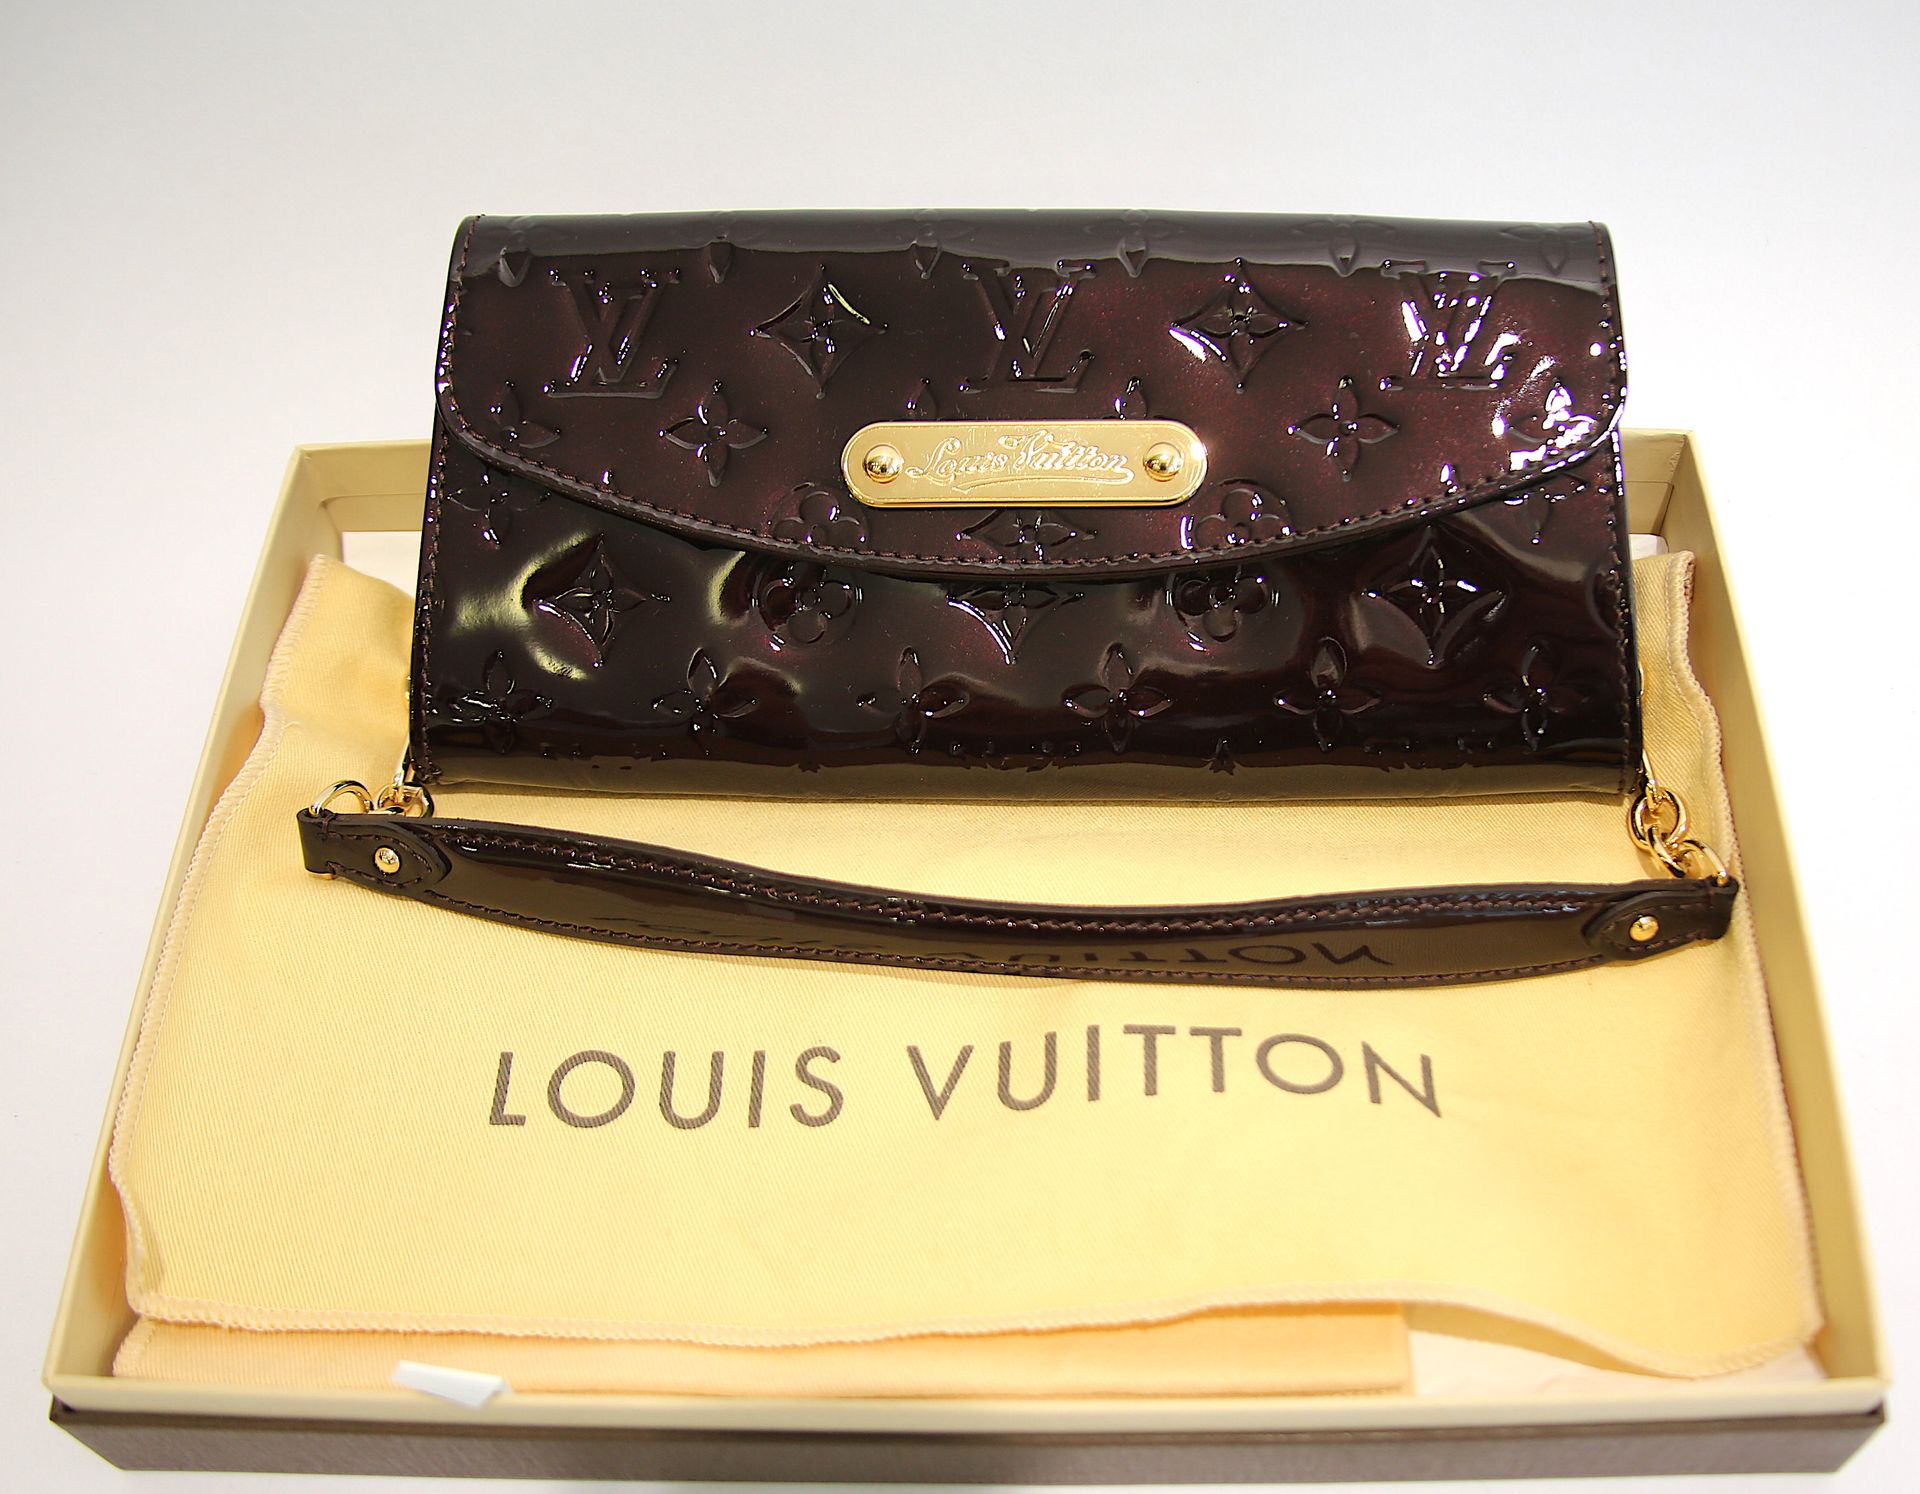 VUITTON Louis VUITTON Sunset Boulevard lacquered leather pouch